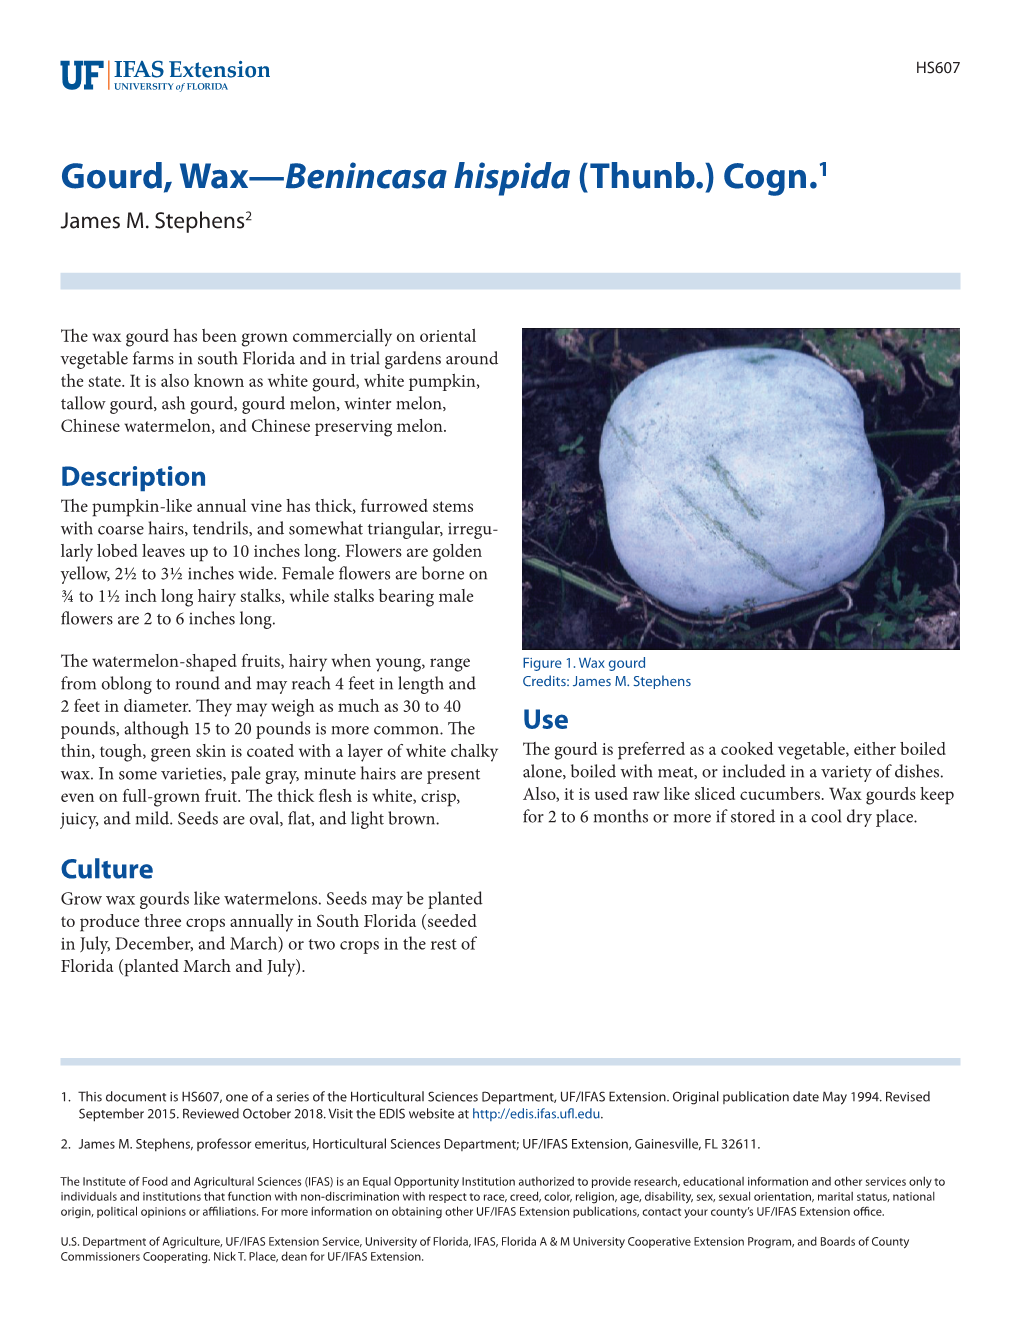 Gourd, Wax—Benincasa Hispida (Thunb.) Cogn.1 James M